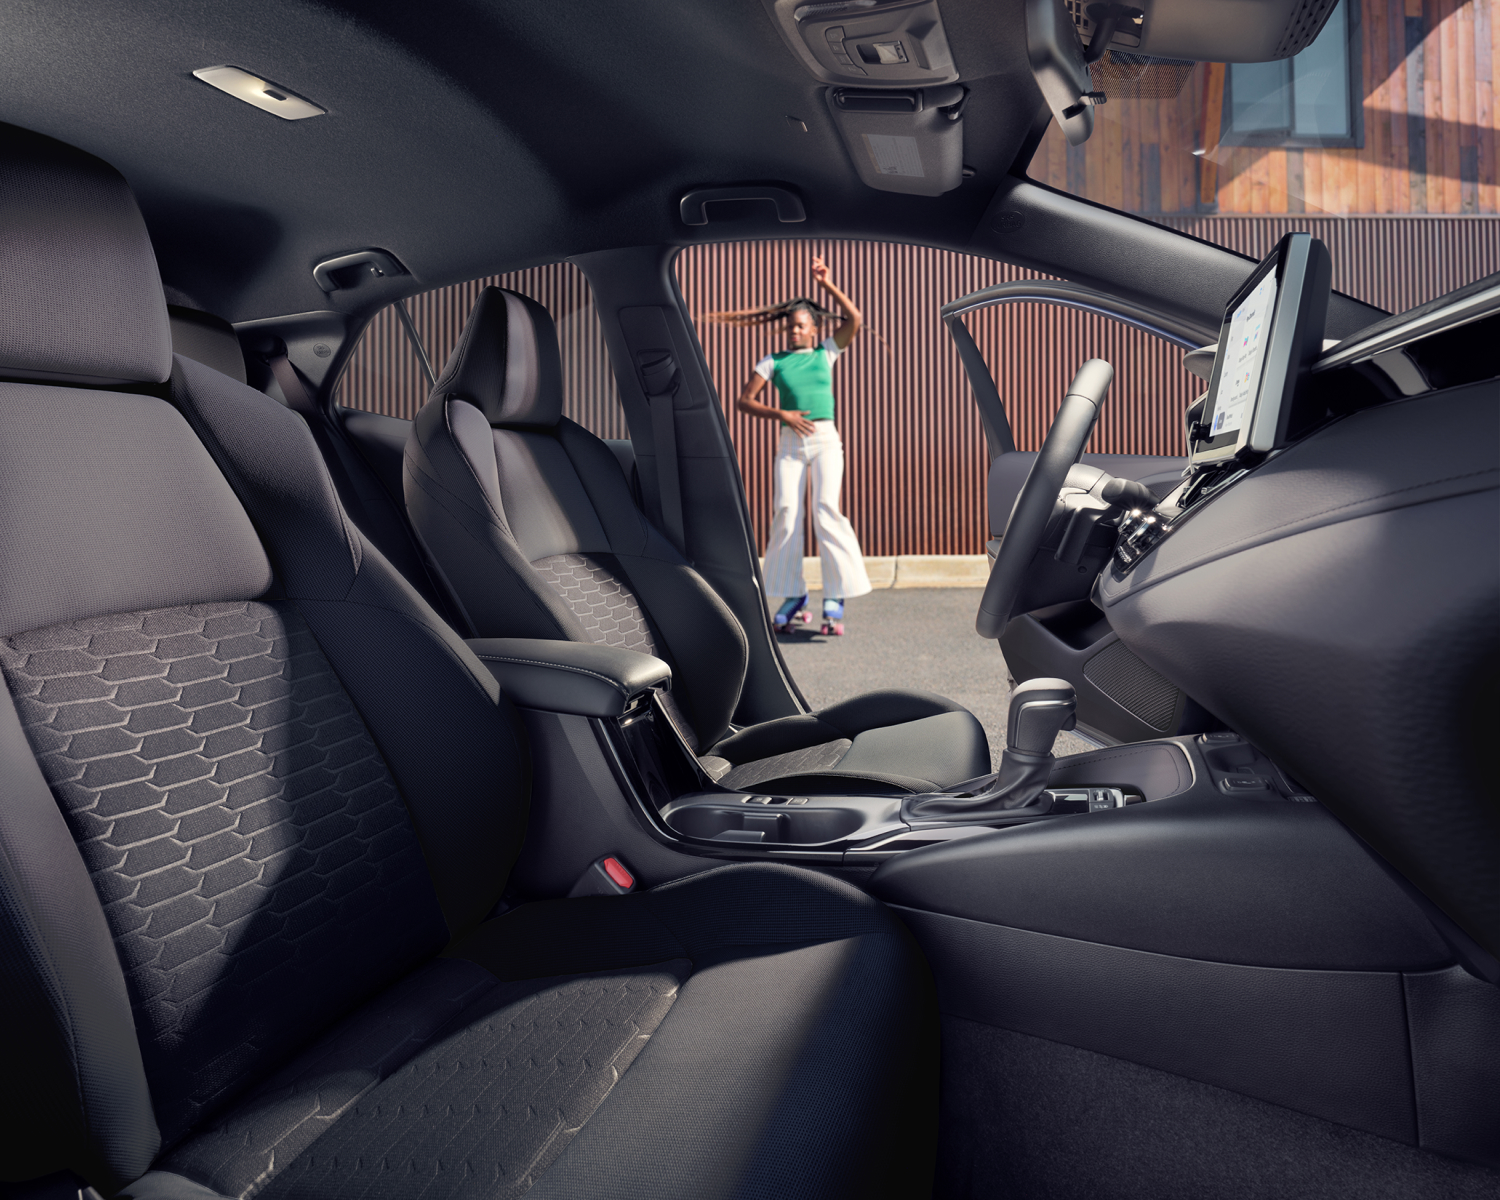 Corolla Hatchback Interior in Black